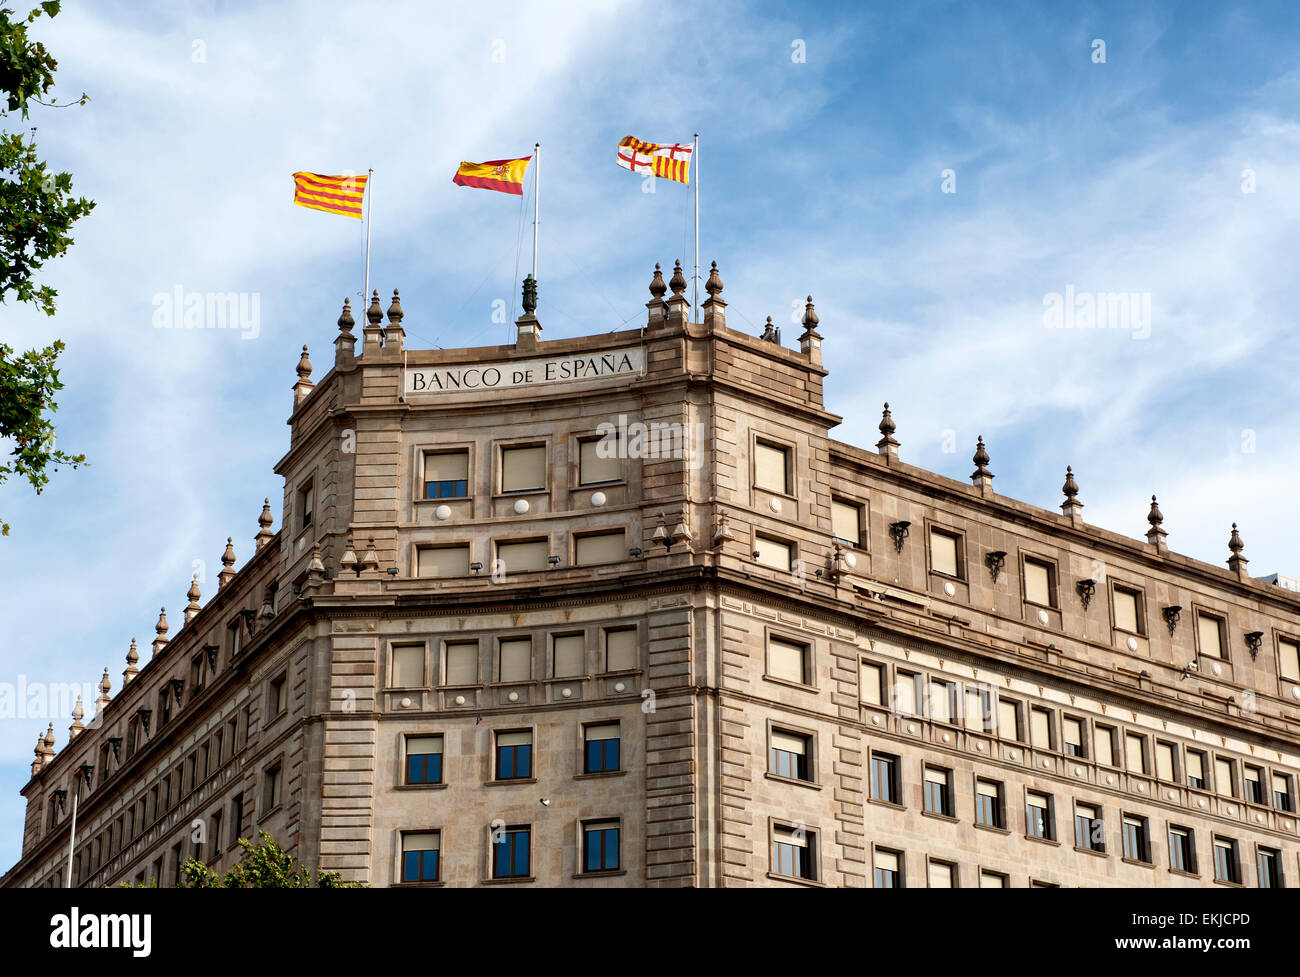 Office of Spanish bank Banco de España in Barcelona city centre, Spain, against a blue sky Stock Photo